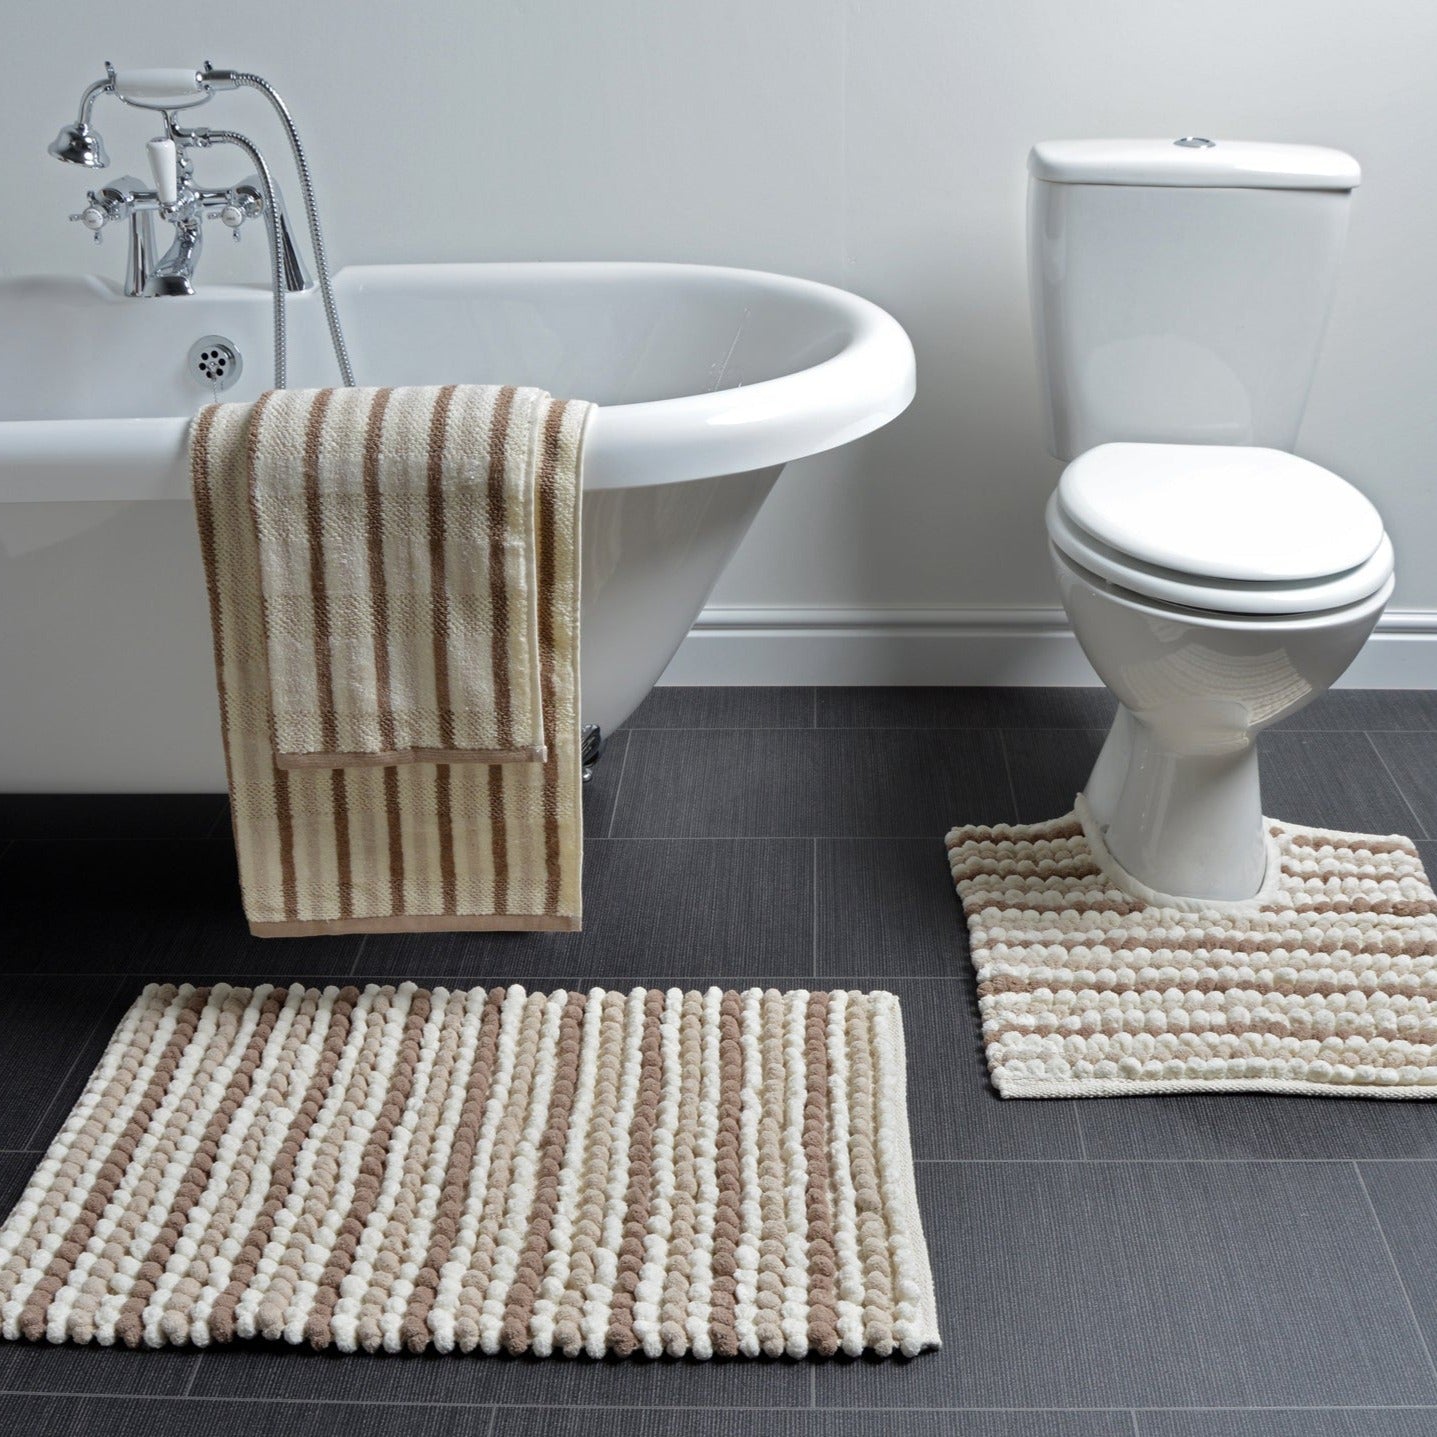 Neutral/beige striped bathroom mat set - 2pc bath mat and pedestal set in chunky bobble striped design